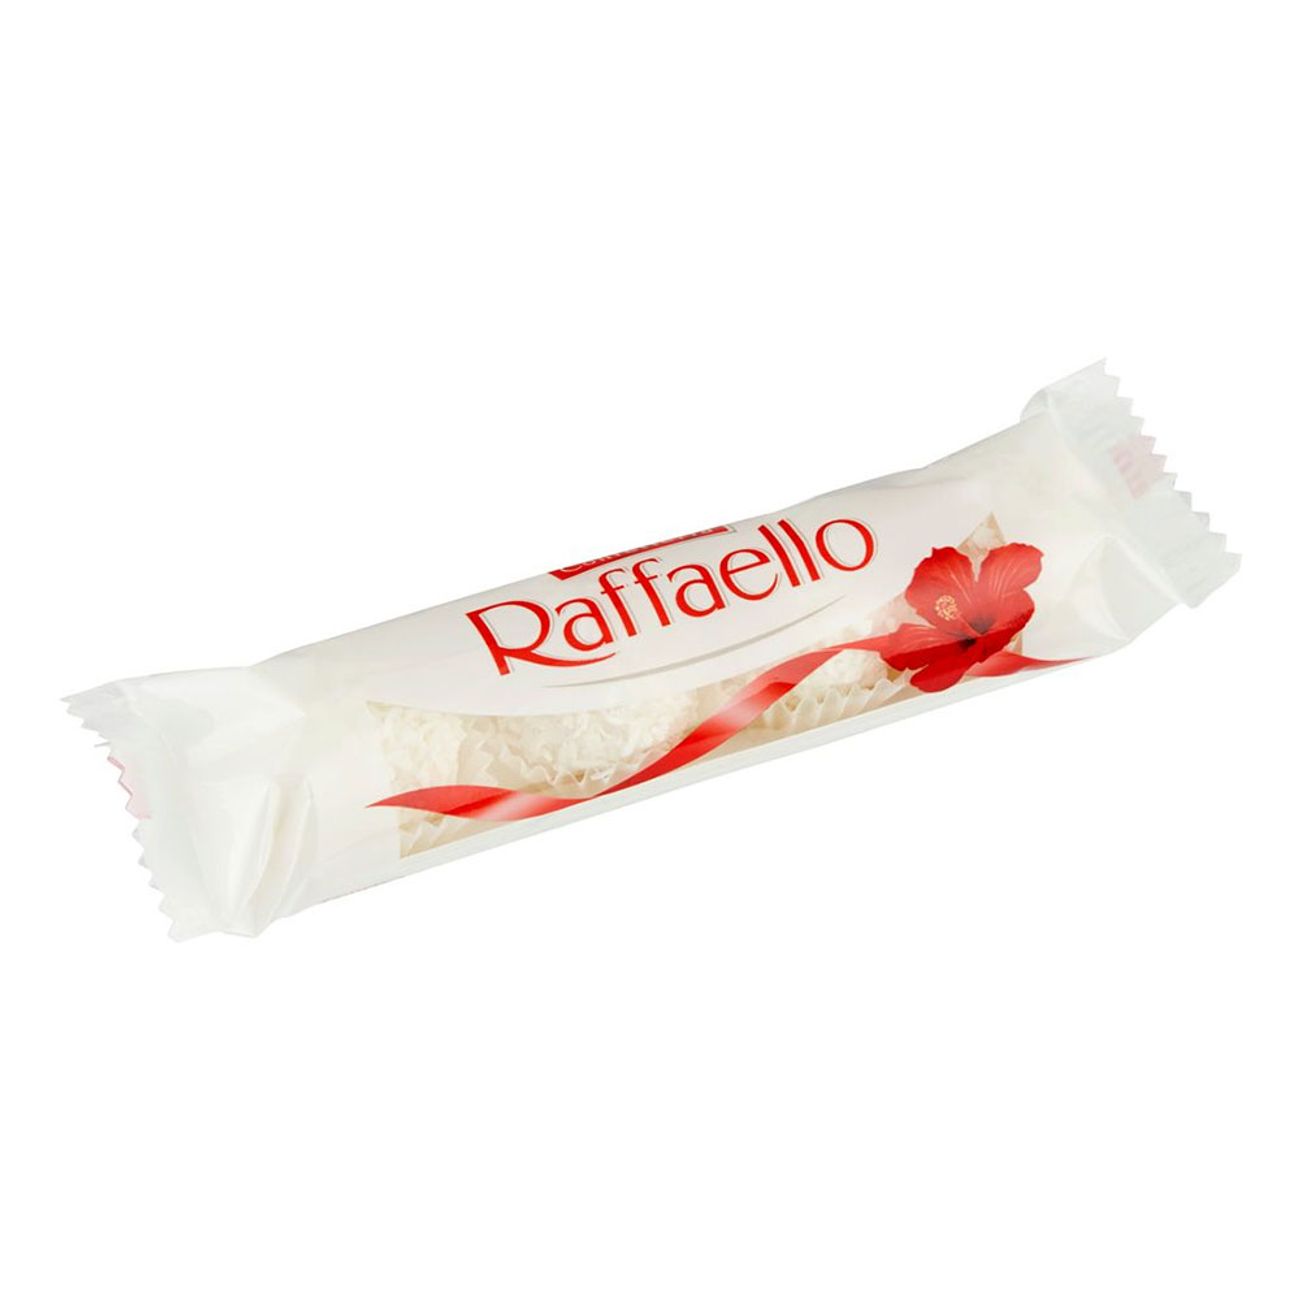 raffaello-chokladbit-80269-1